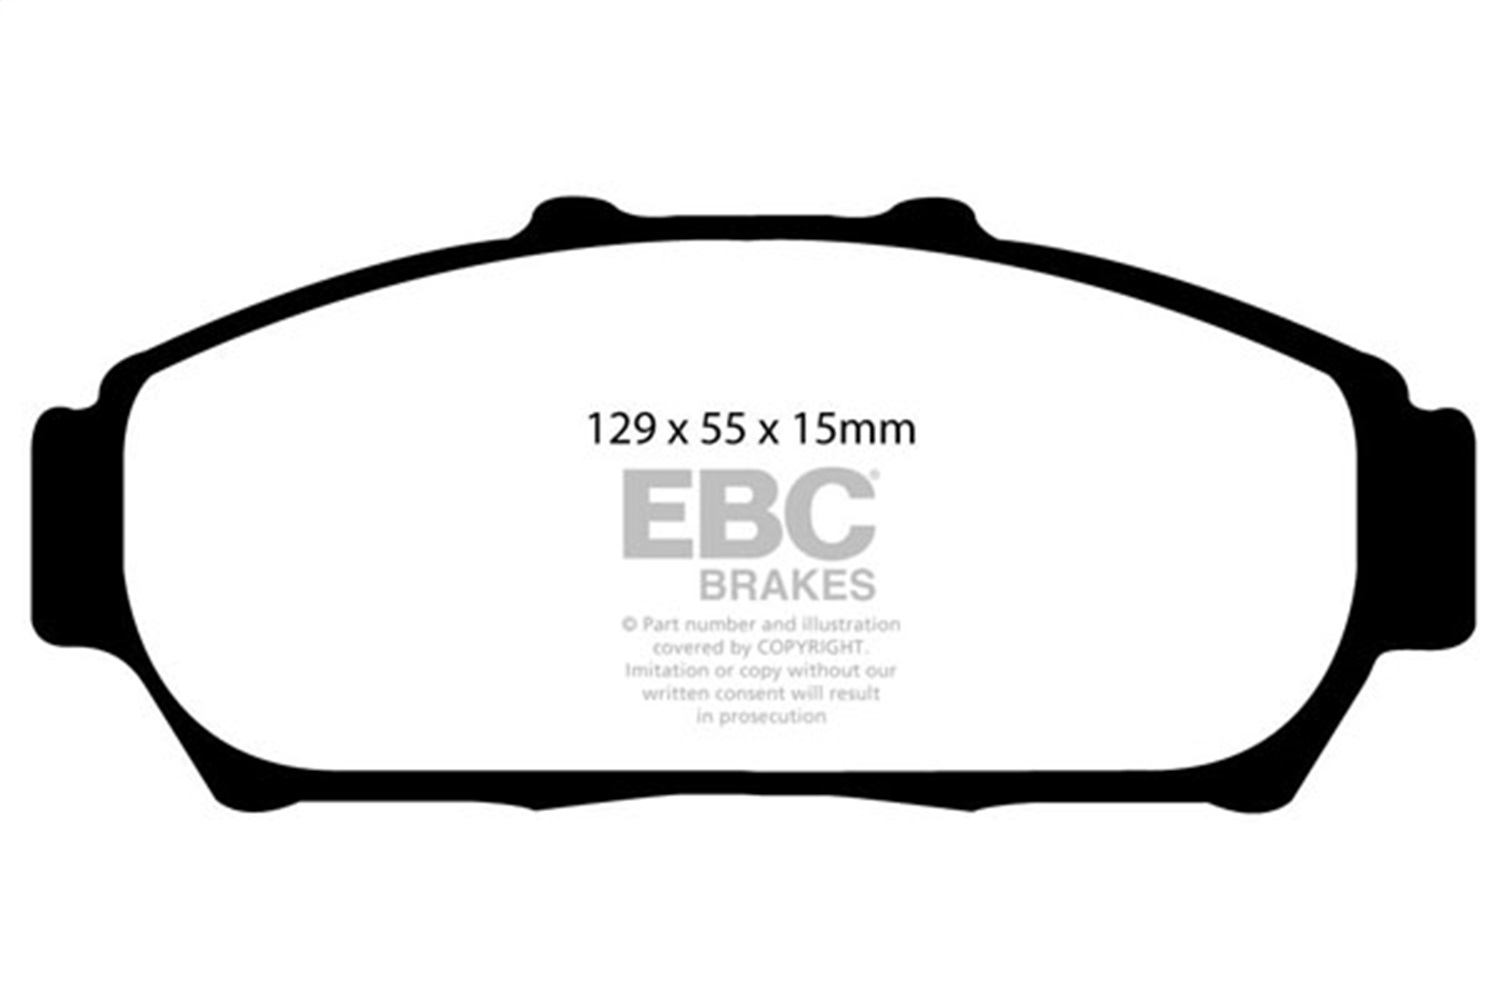 EBC Brakes UD617 Ultimax  Brake Pads Fits 93-01 Civic Integra